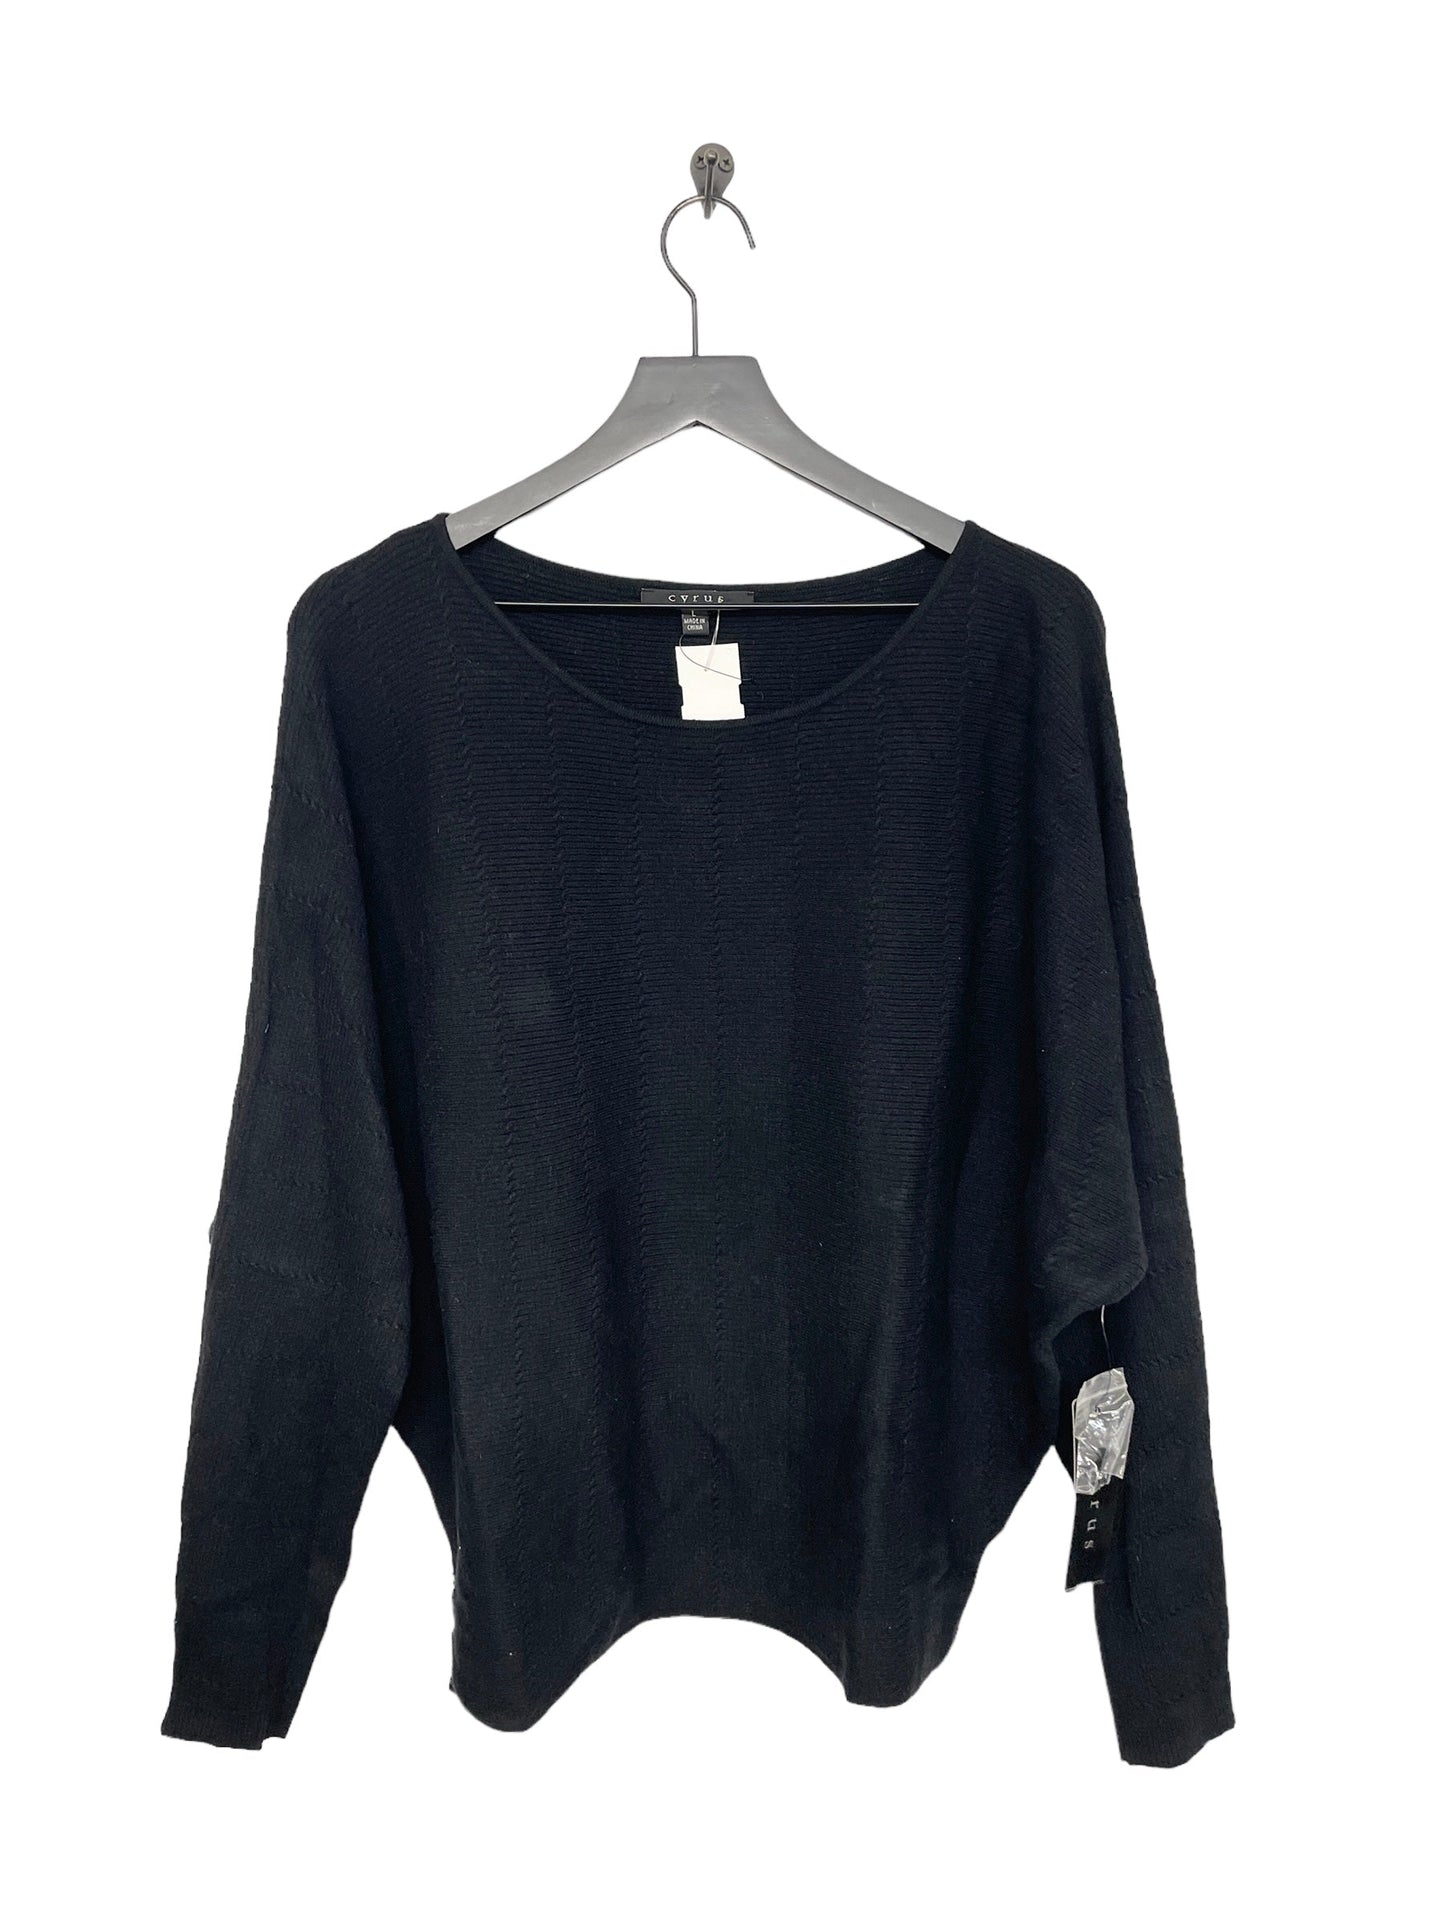 Black Sweater Cyrus Knits, Size L